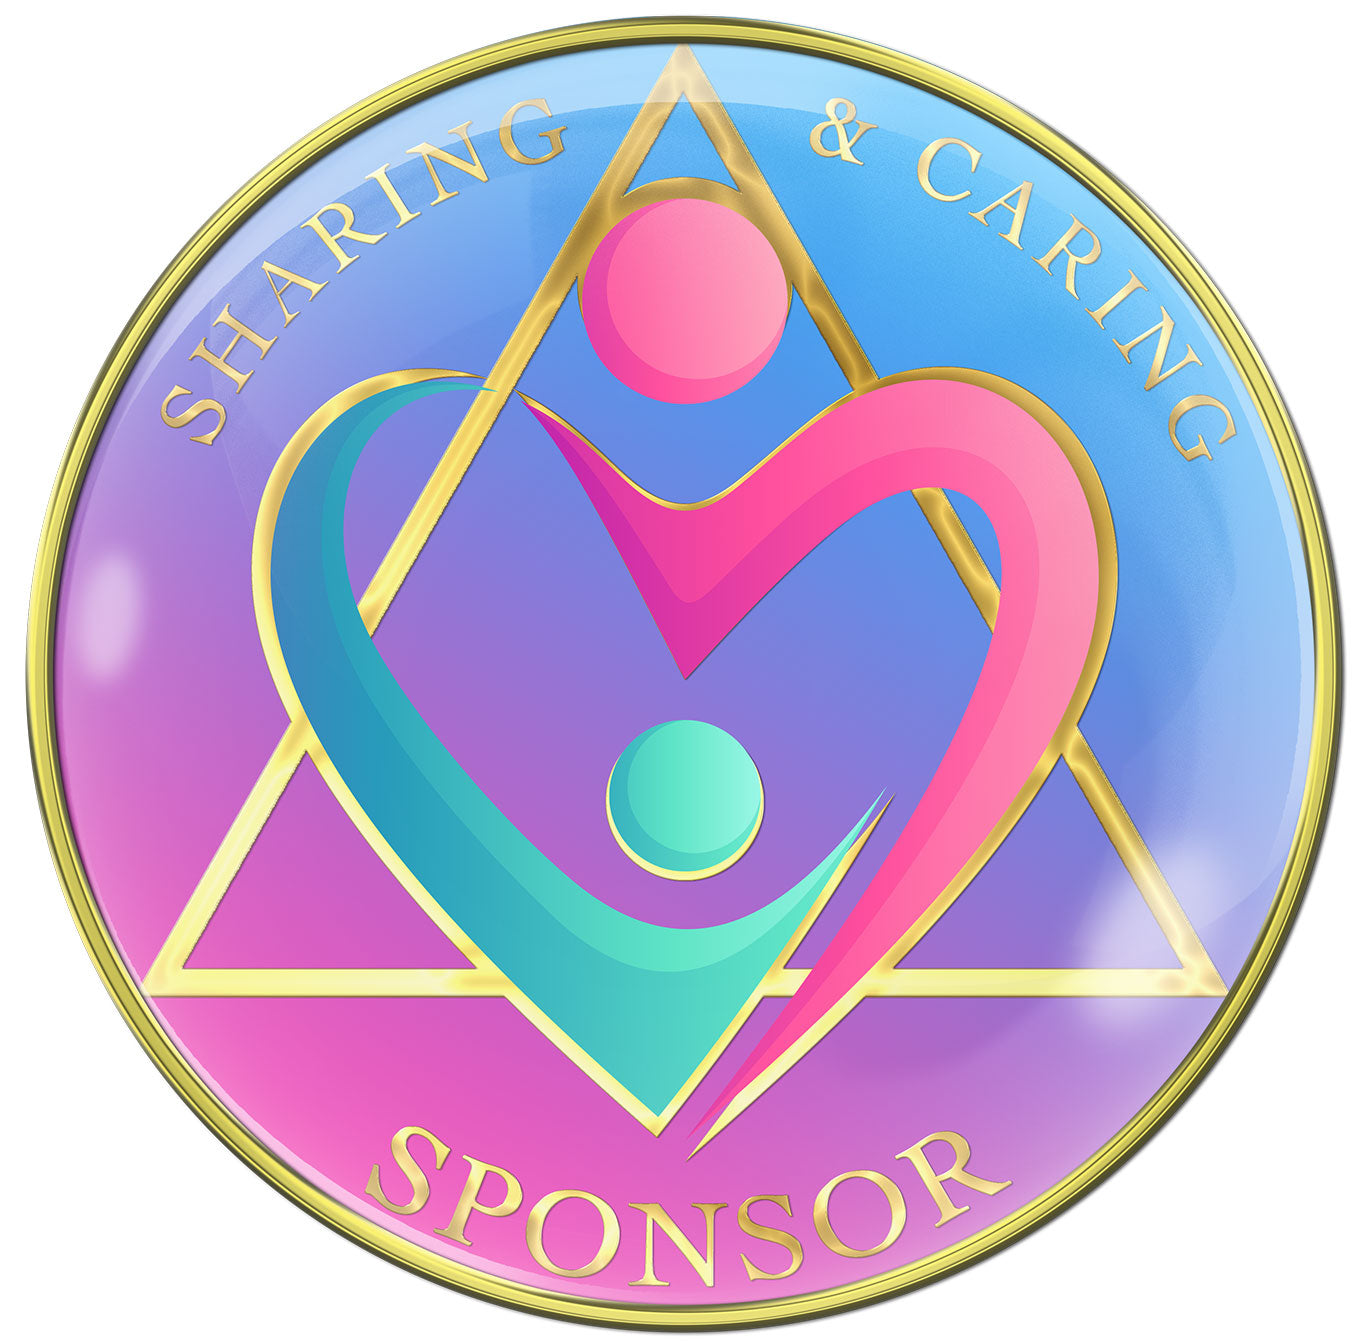 AA Sponsor Medallion - "Sharing & Caring"